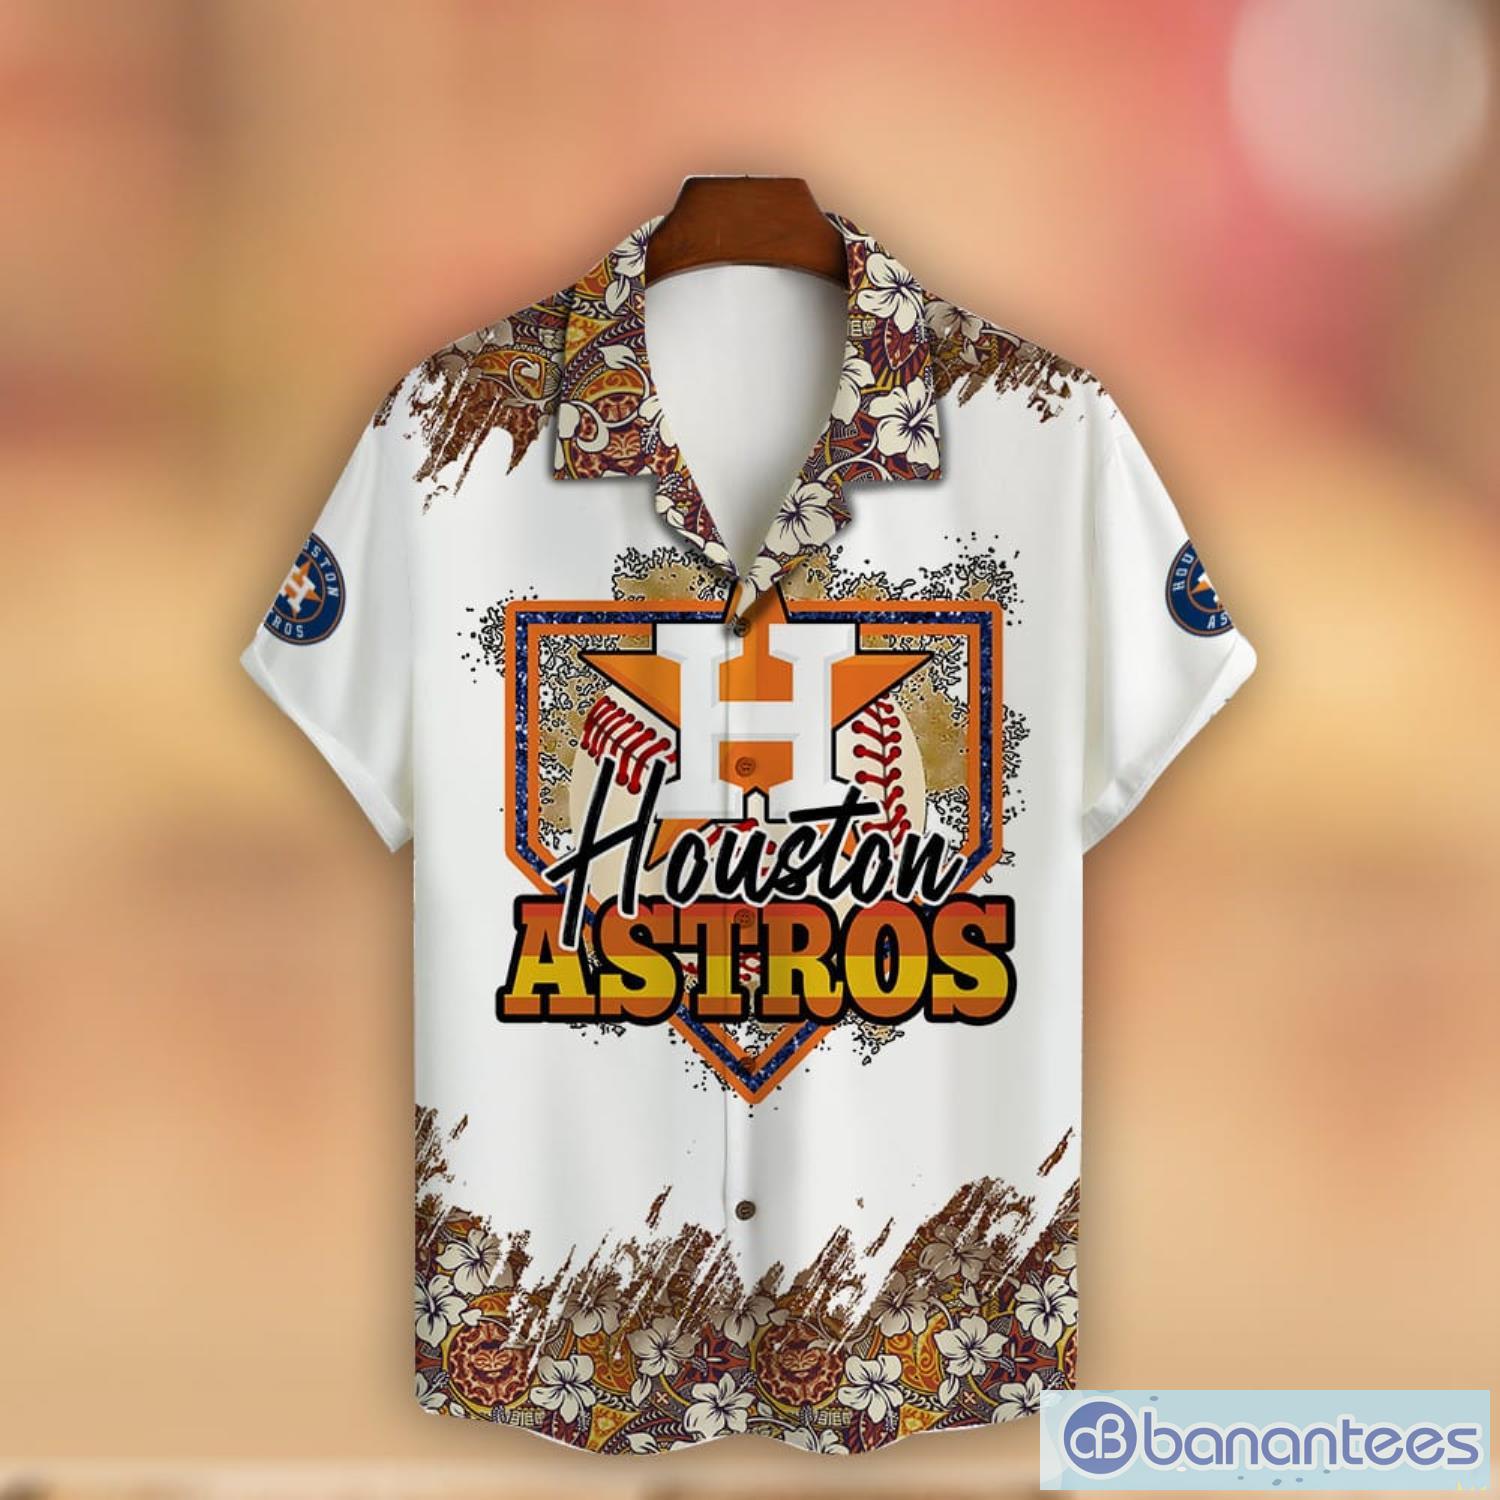 Houston Baseball Sweatshirt, Vintage Astros Shirt, Game Day